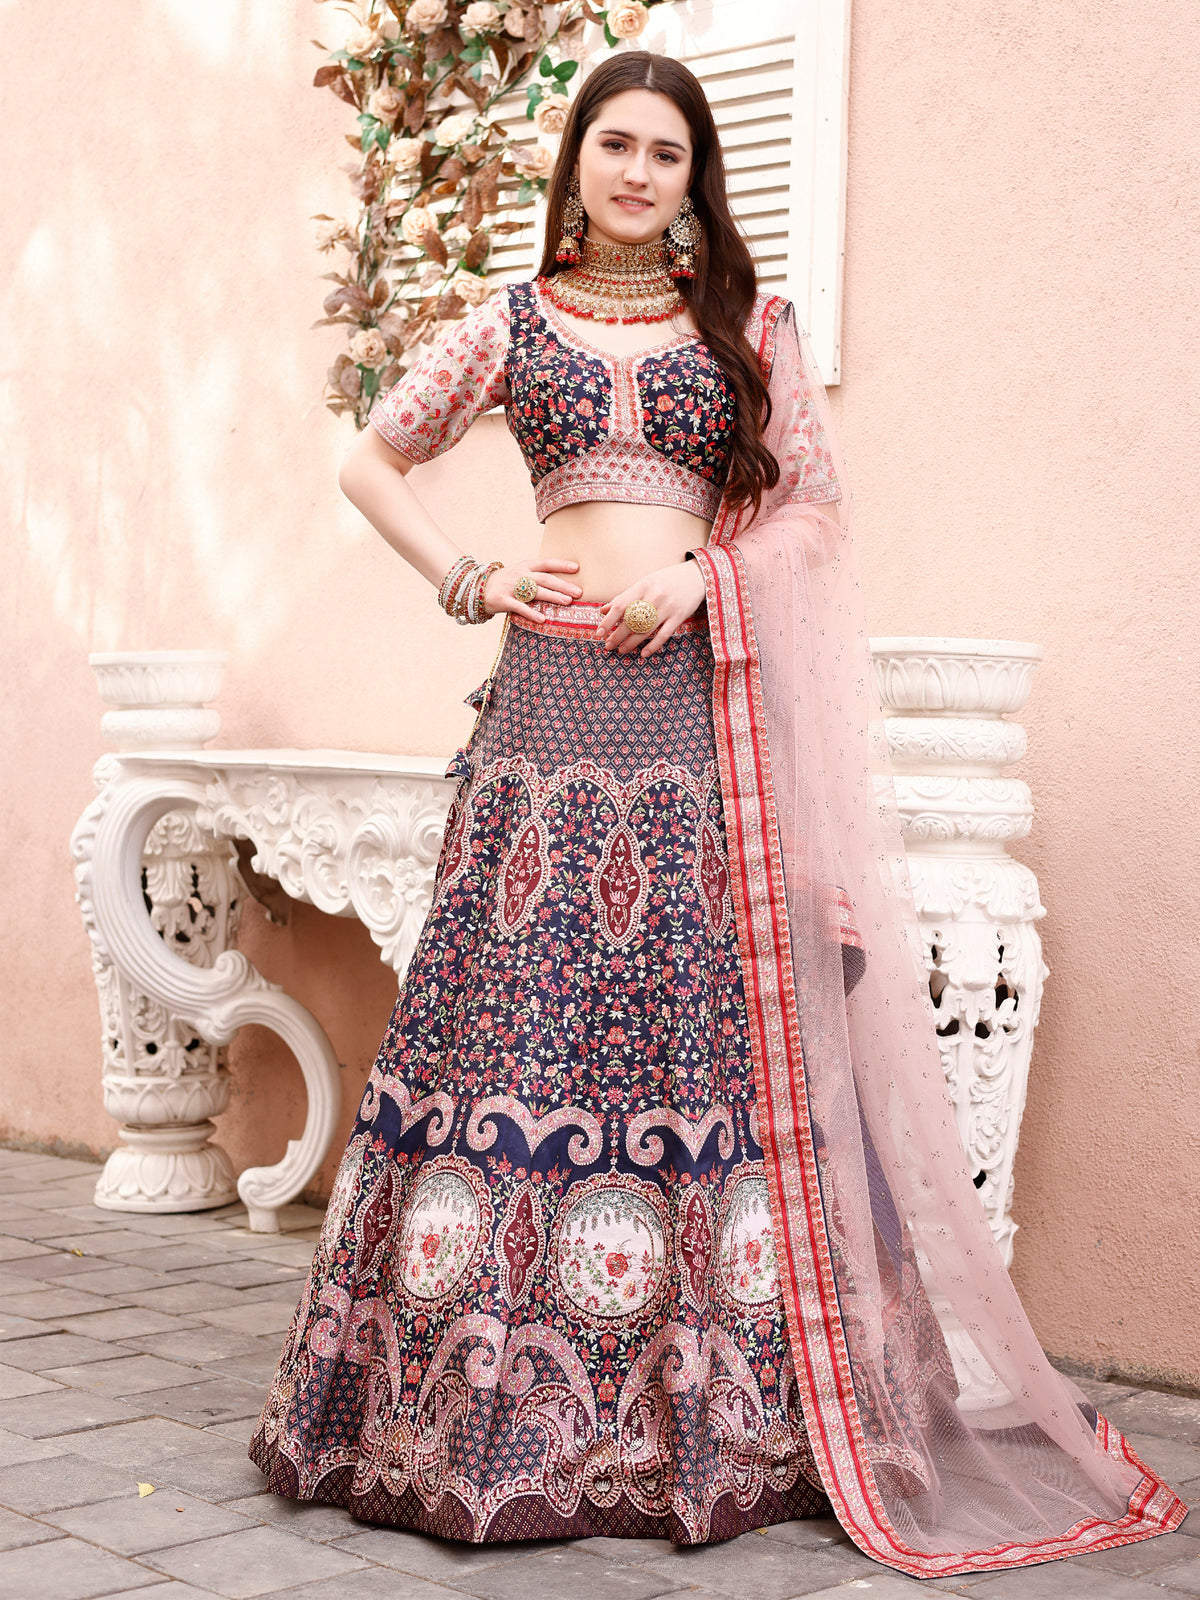 Dazzling Elegance: Swarovski Embellished Lehengas for Bridal Bliss and Semi-Bridal Splendor